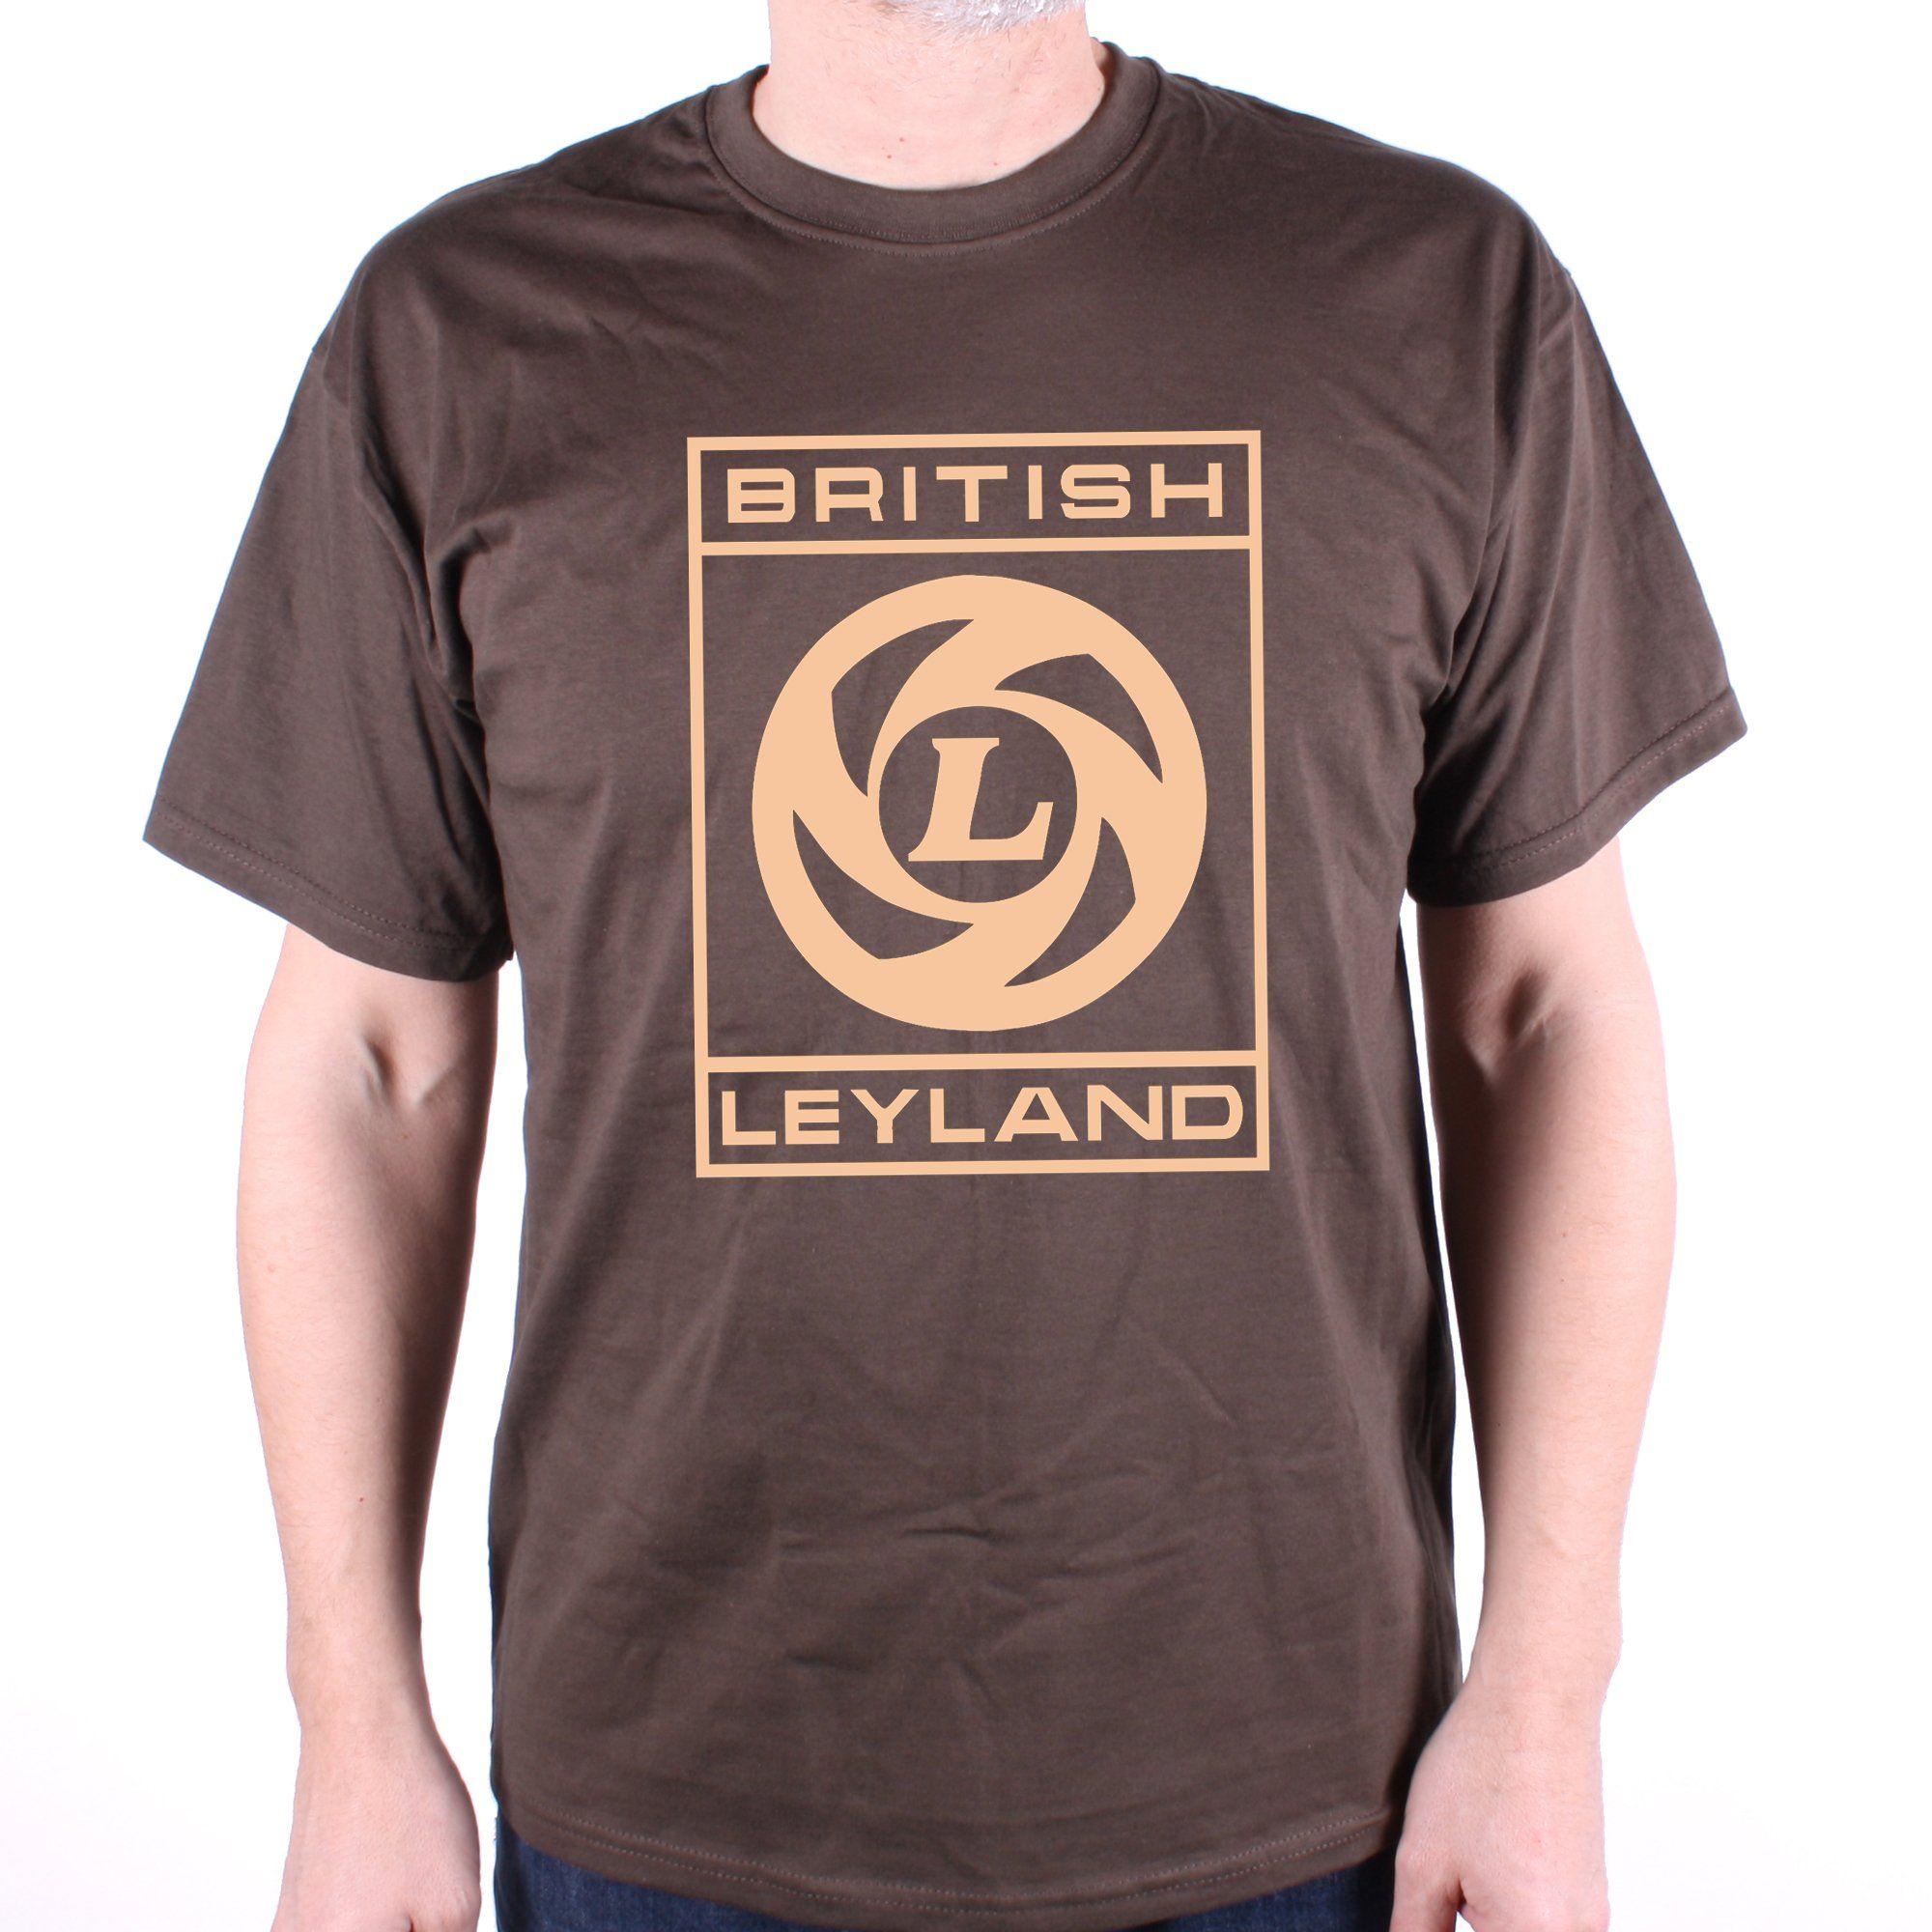 Old British Leyland Logo - British Leyland T shirt - Classic Logo / Car T shirts from Old Skool ...